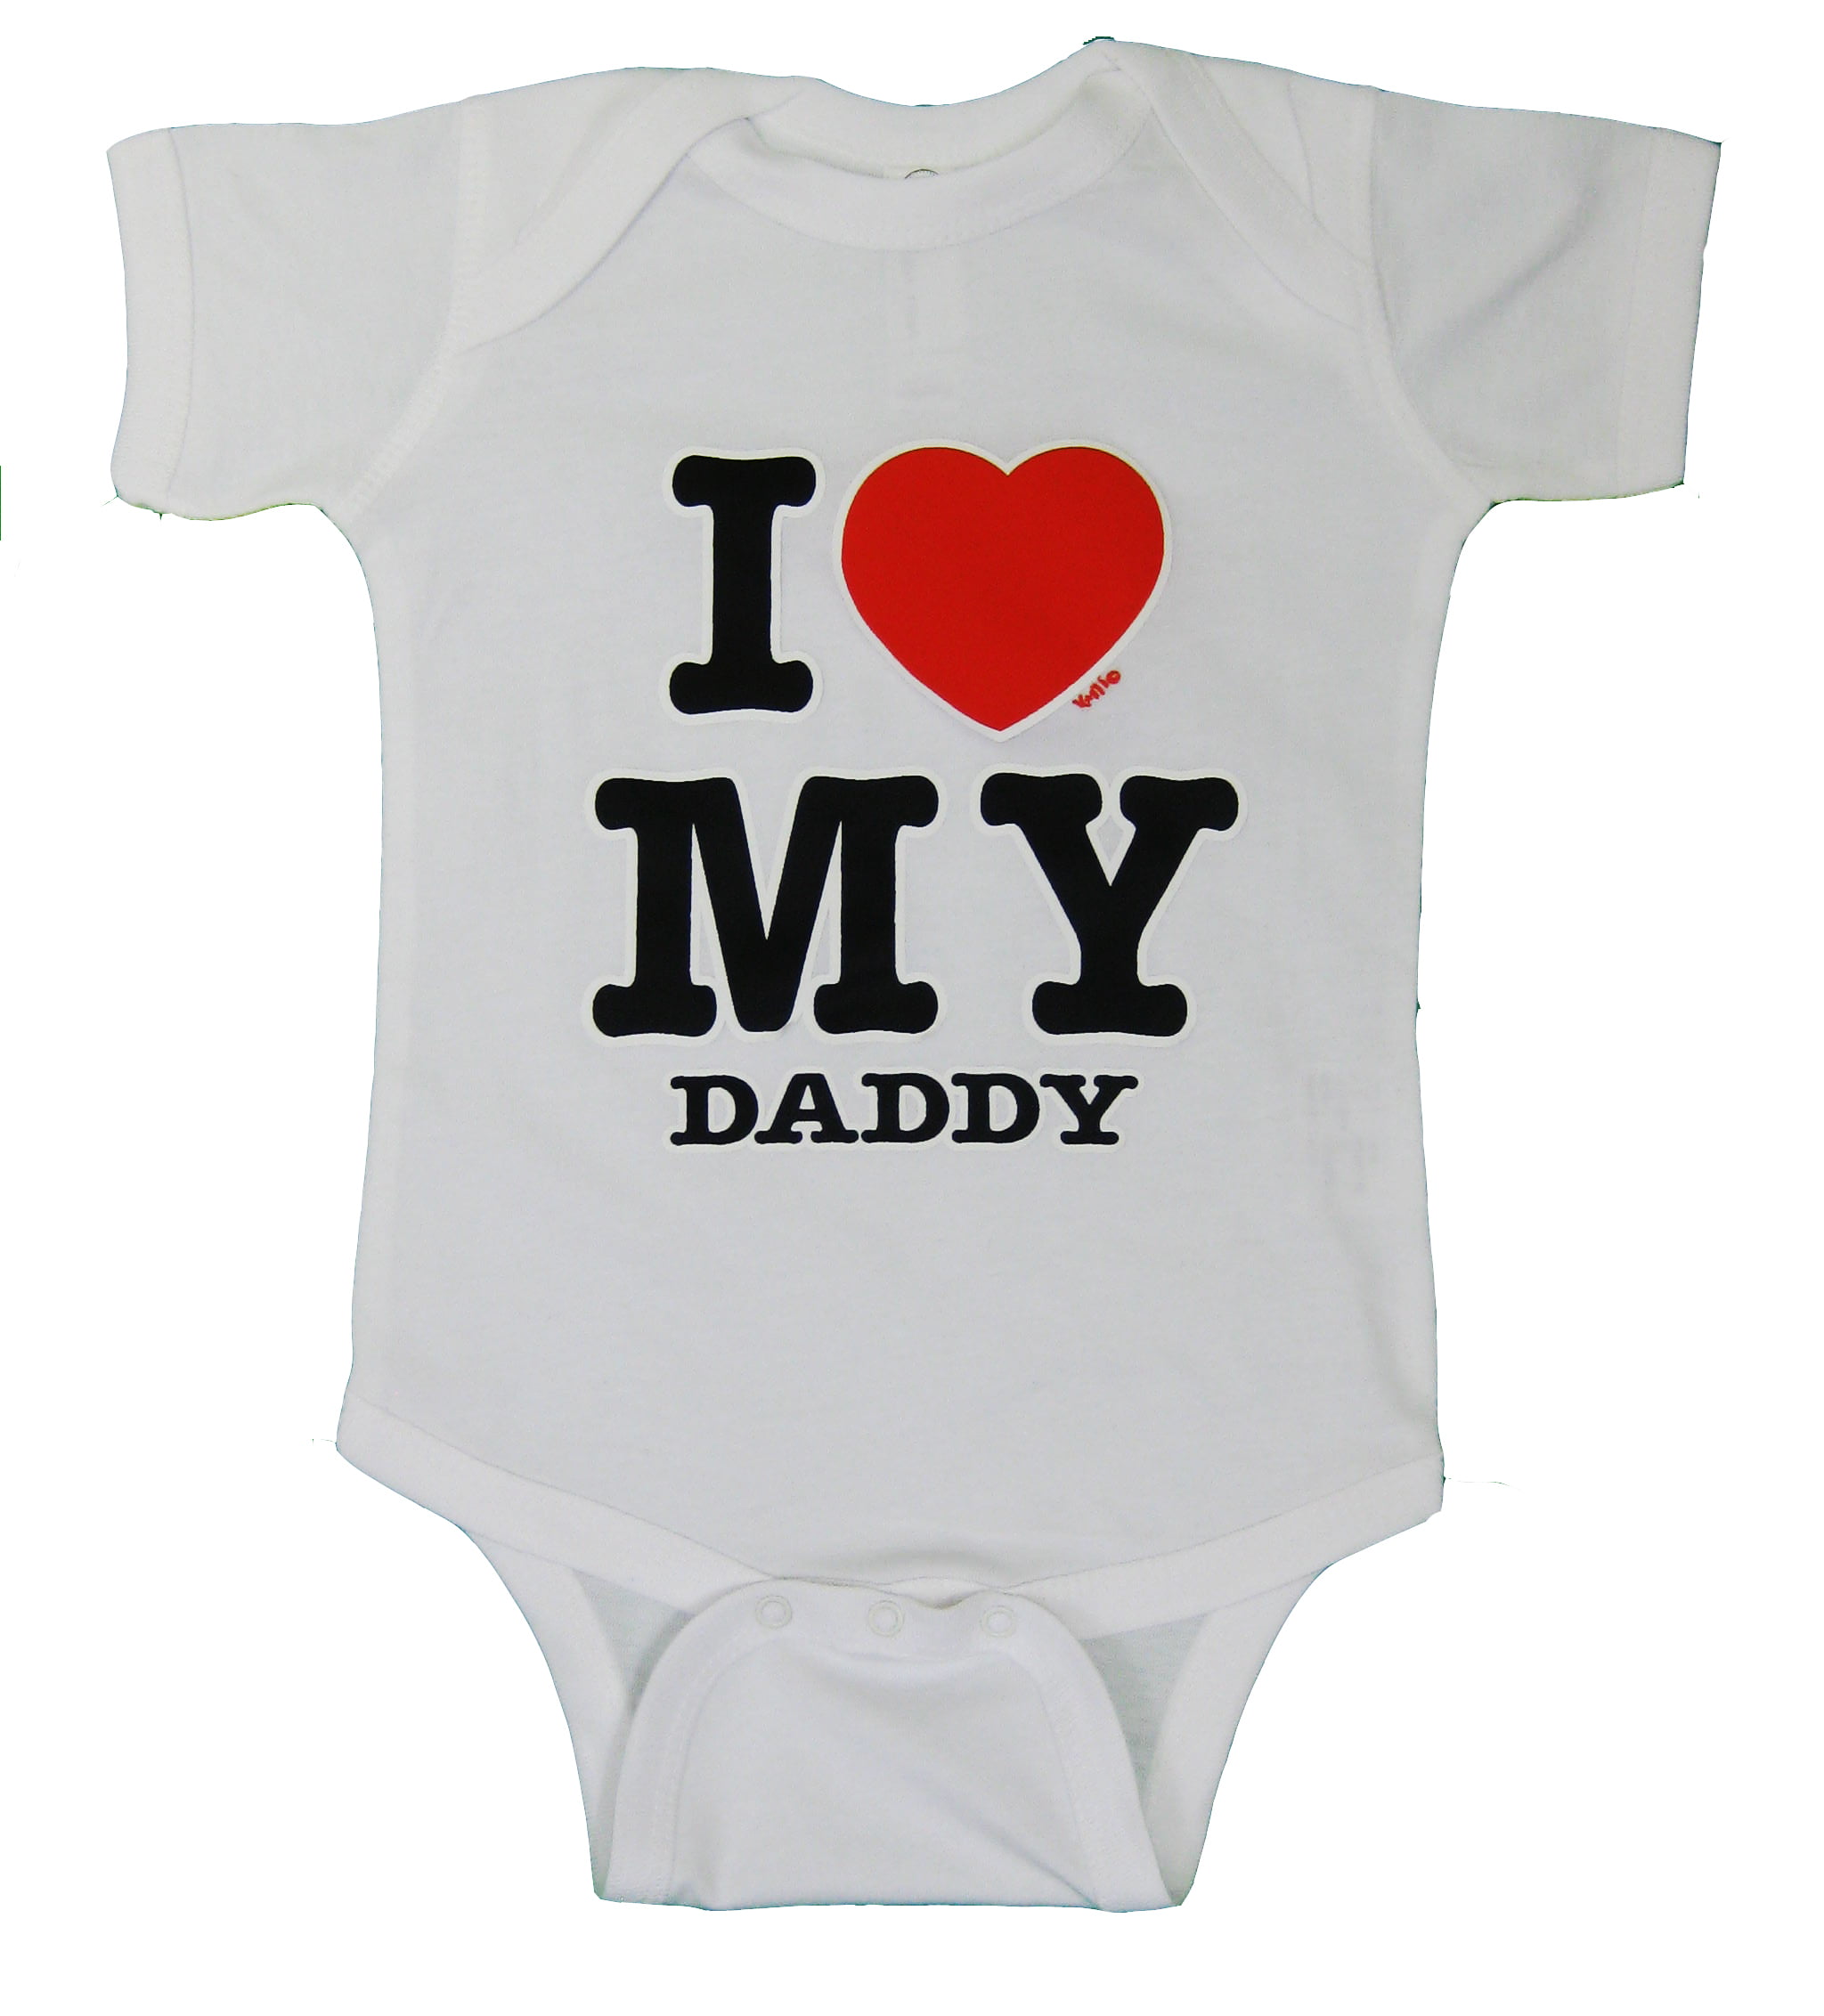 I Love DADDY 1 BODYSUIT KURZARM / LANGARM BABY BODY Heart 